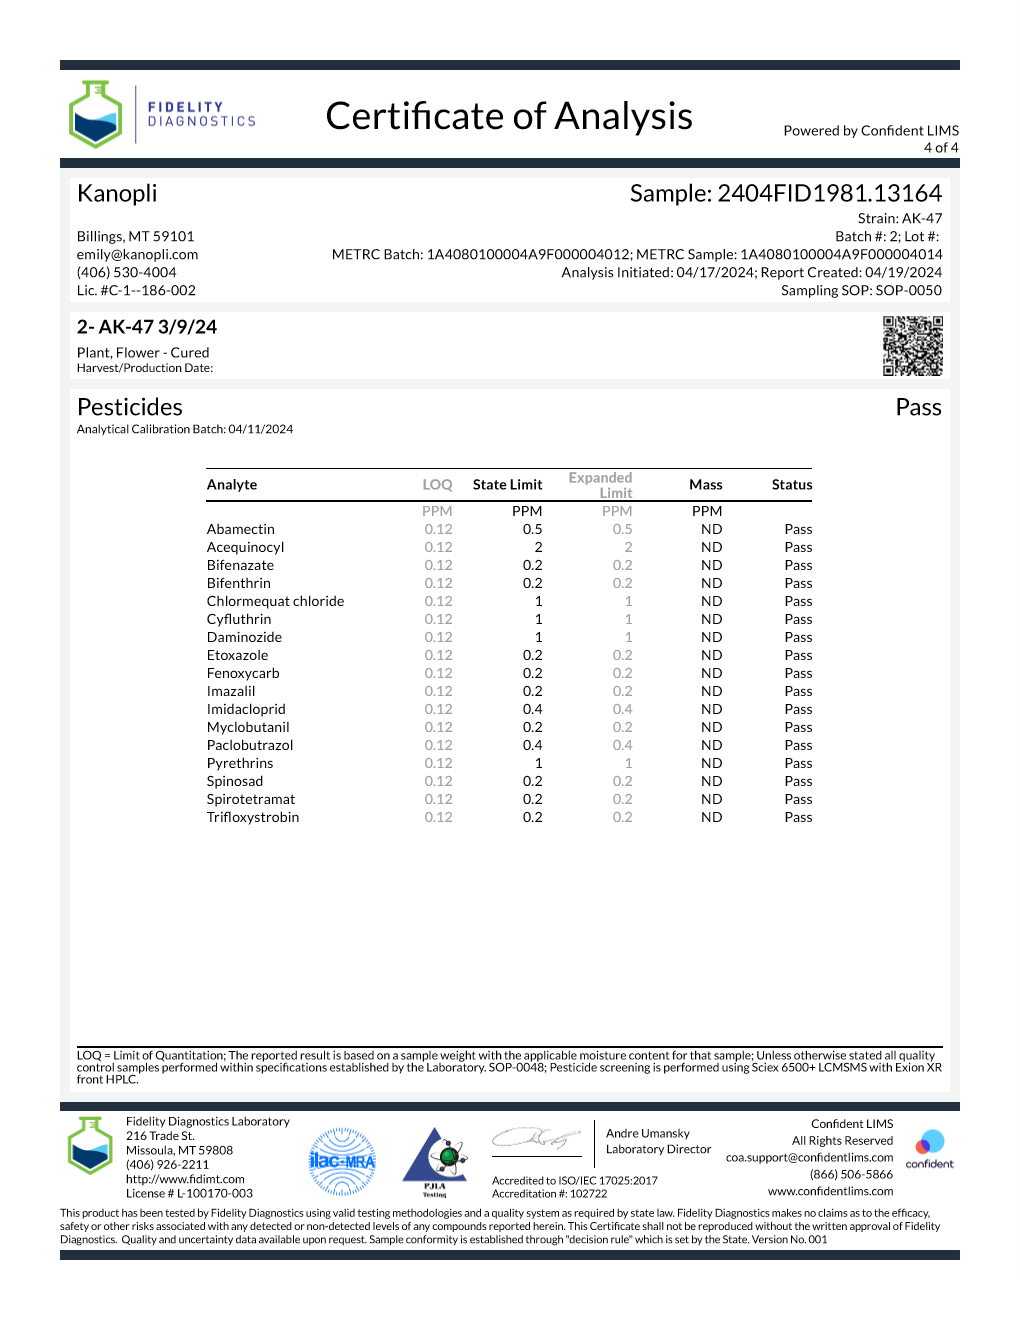 AK-47 shaker - Sativa (26.13% THC) March 2024 - 4 grams